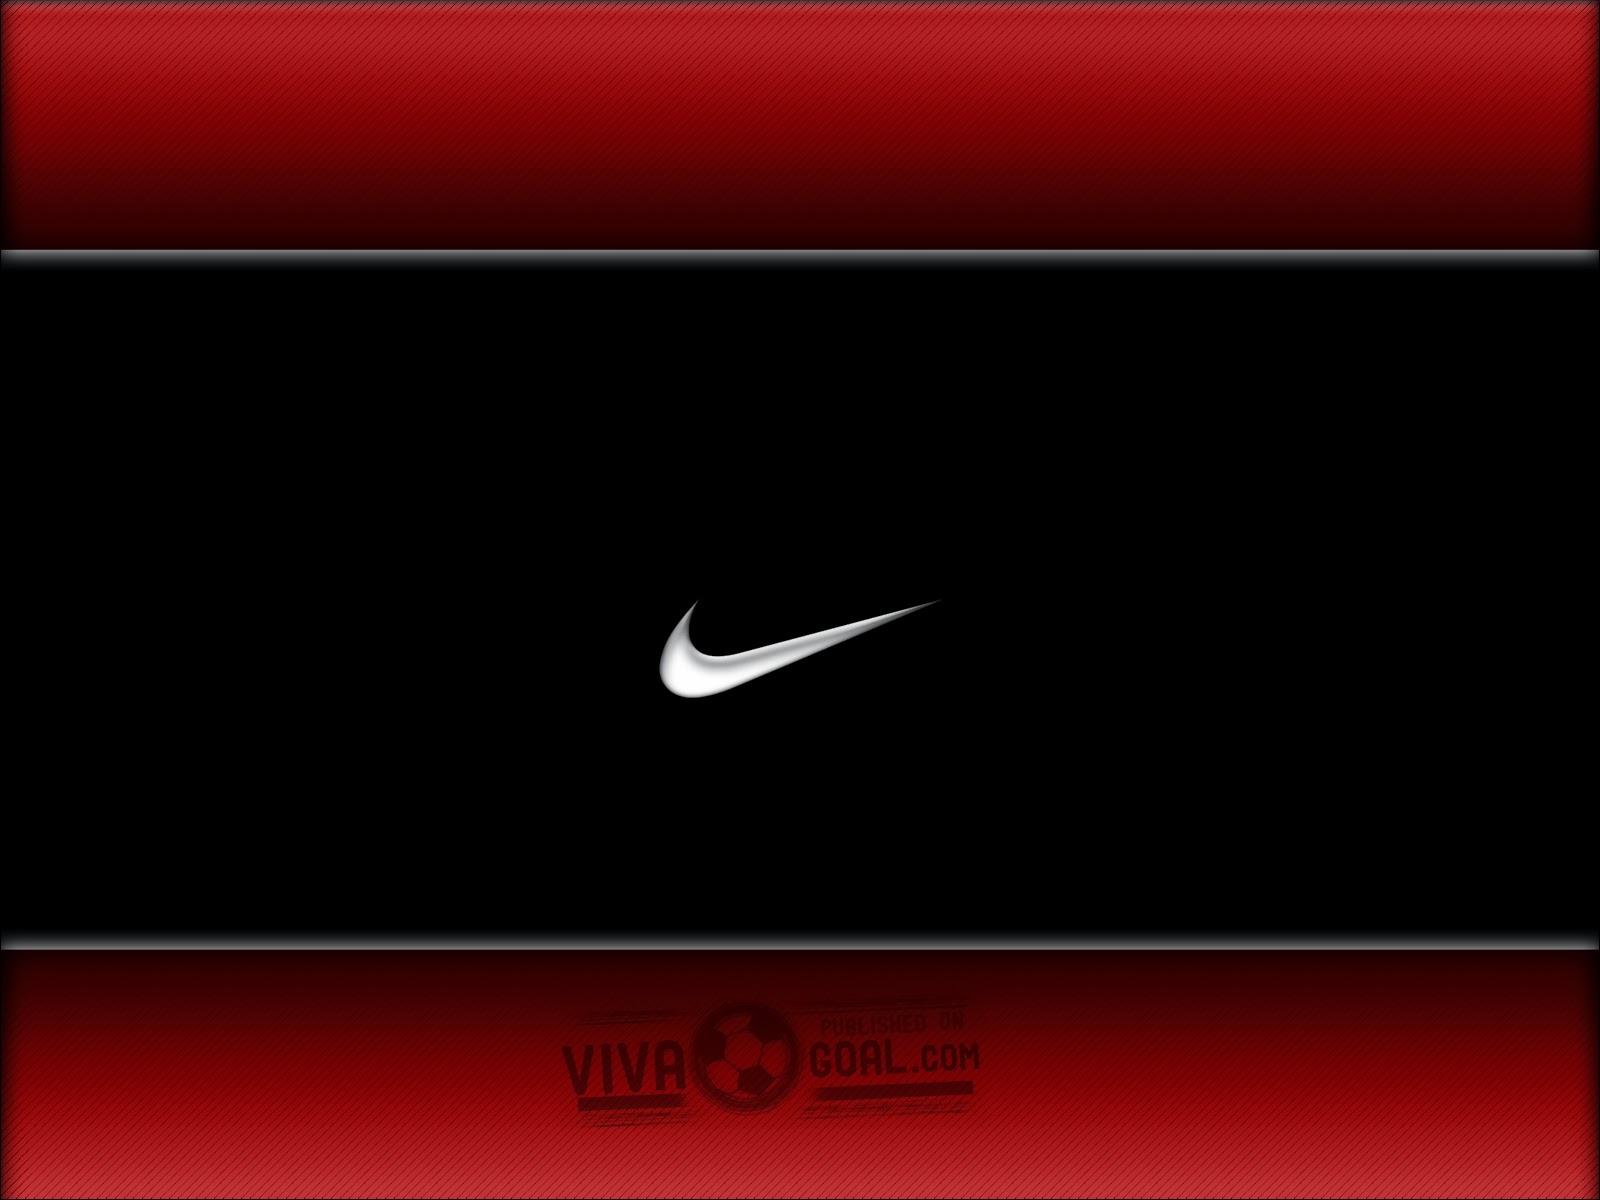 [48+] Nike Football Wallpapers Desktop on WallpaperSafari
